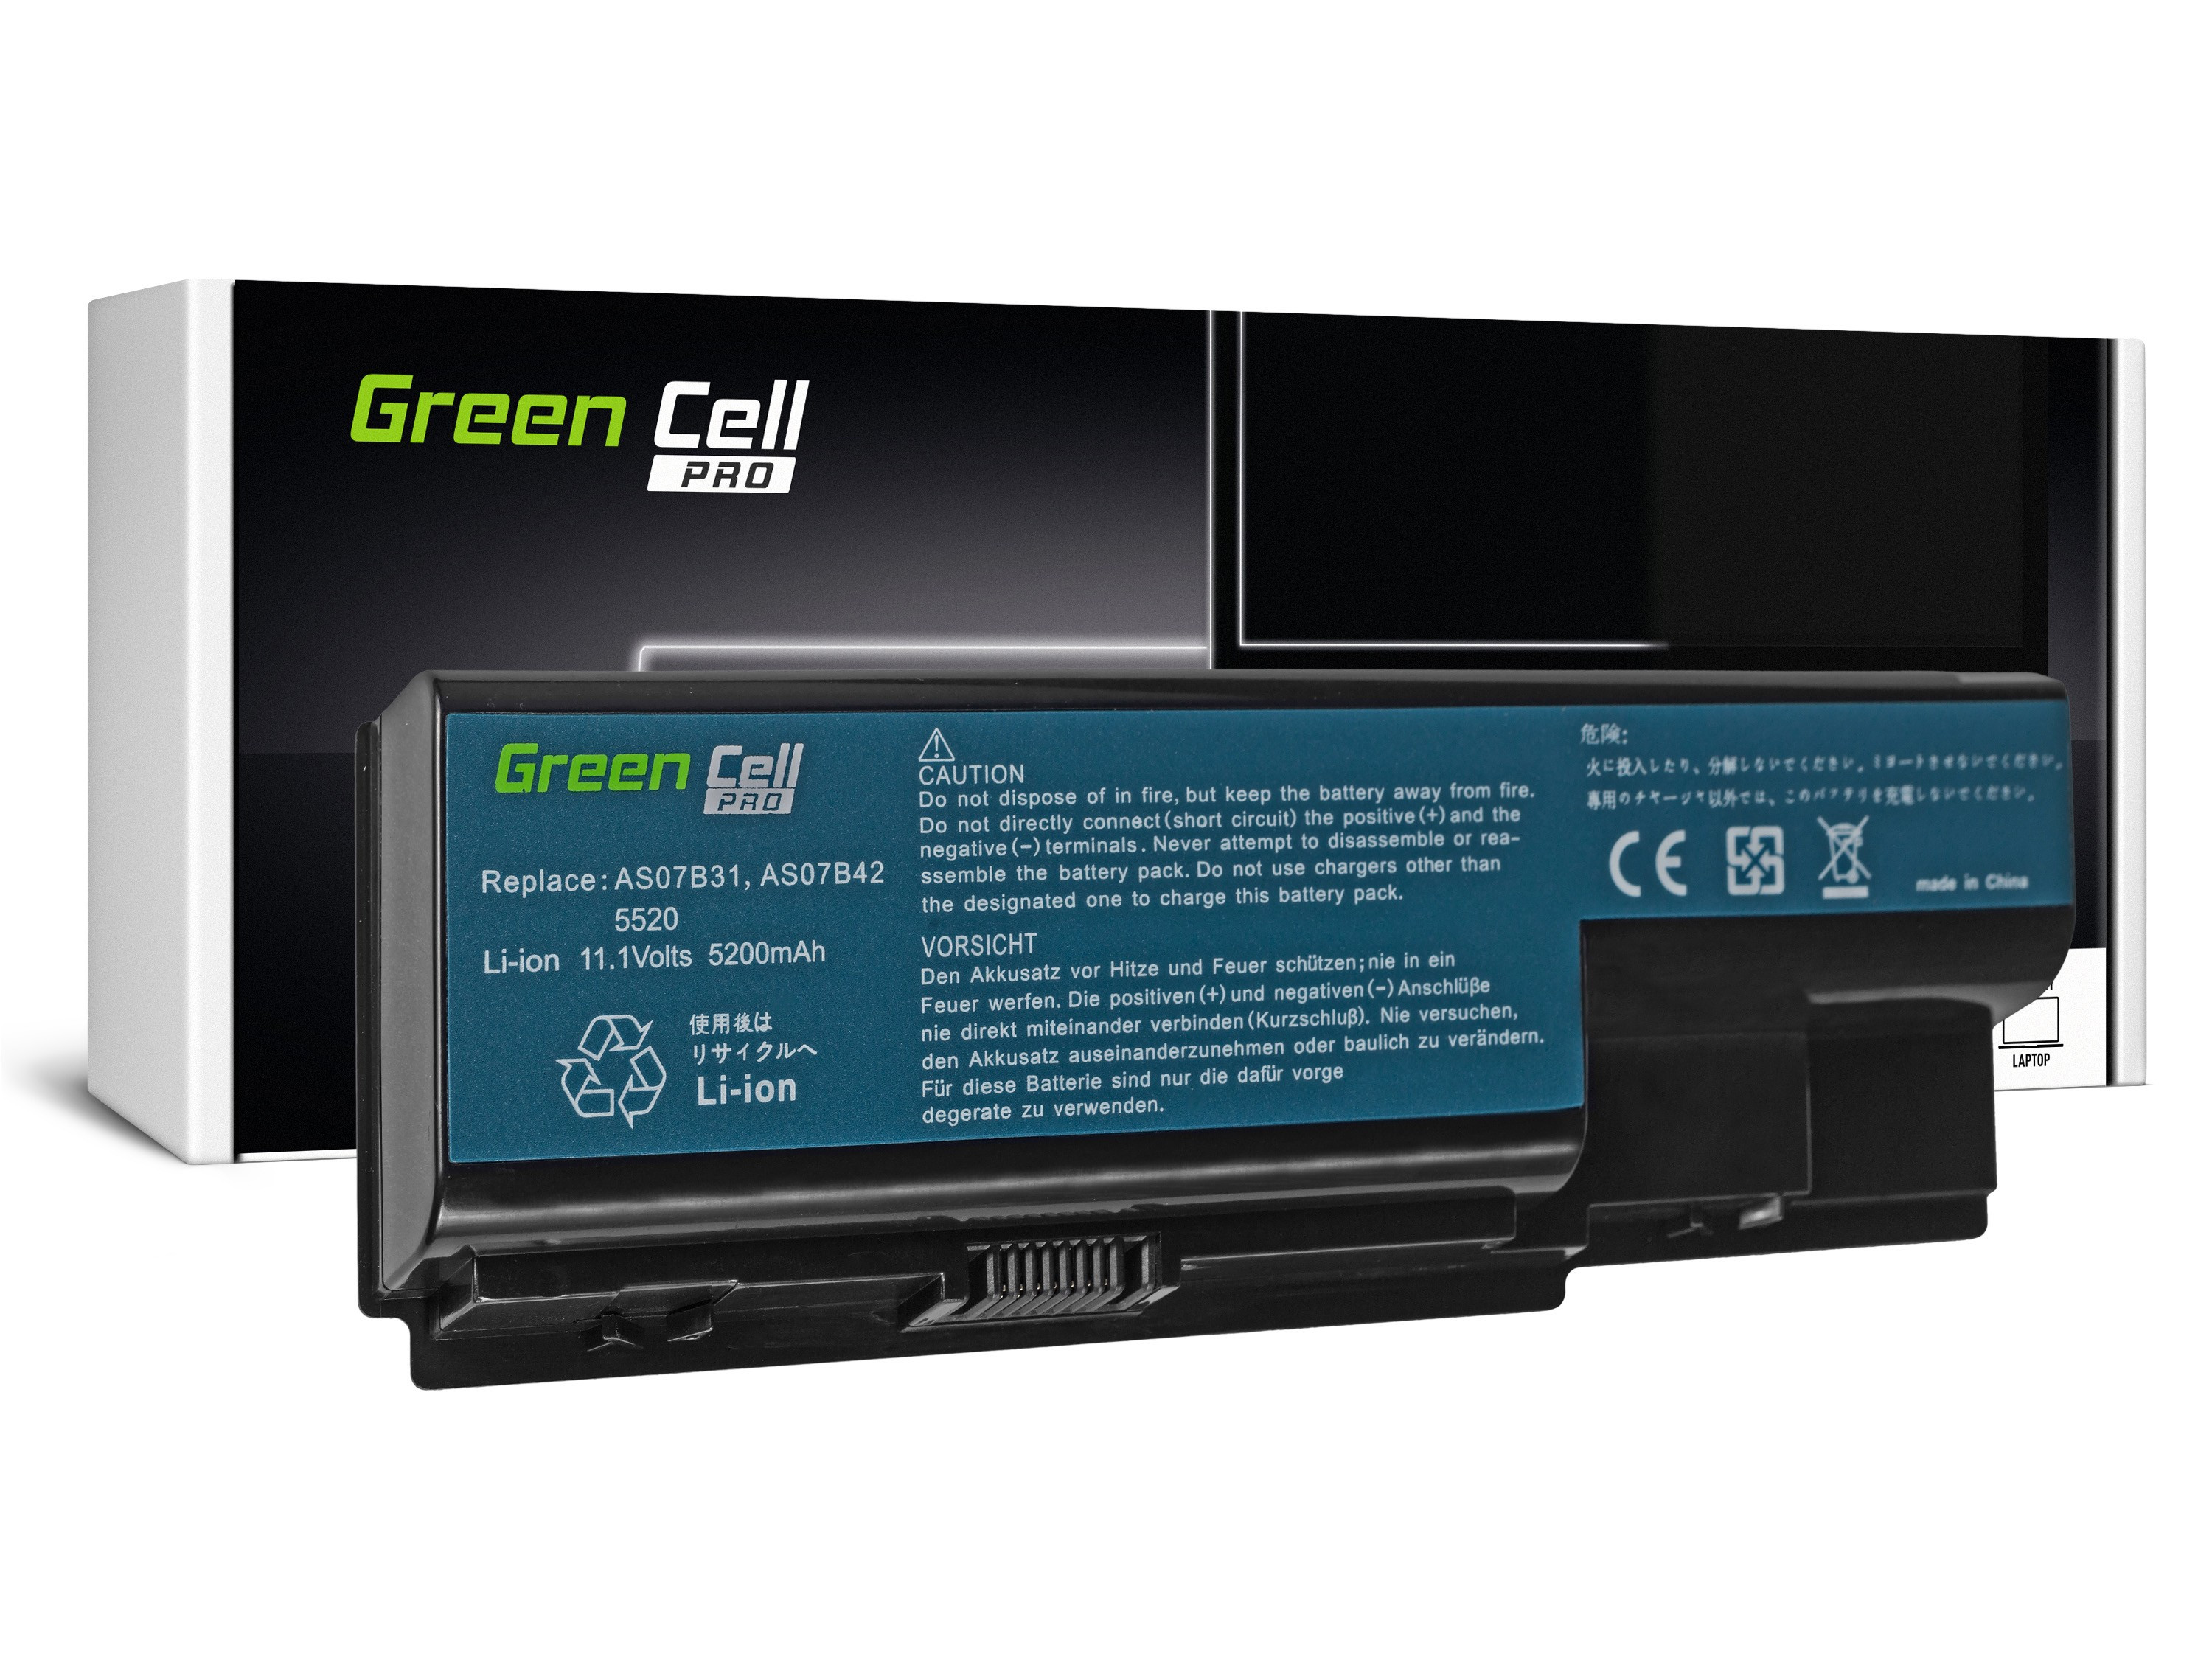 Green Cell AC03PRO Baterie Acer AS07B31 AS07B41 AS07B51 do Acer Aspire 5220 5520 5720 7720 7520 5315 5739 6930 5739G 5200mAh Li-ion